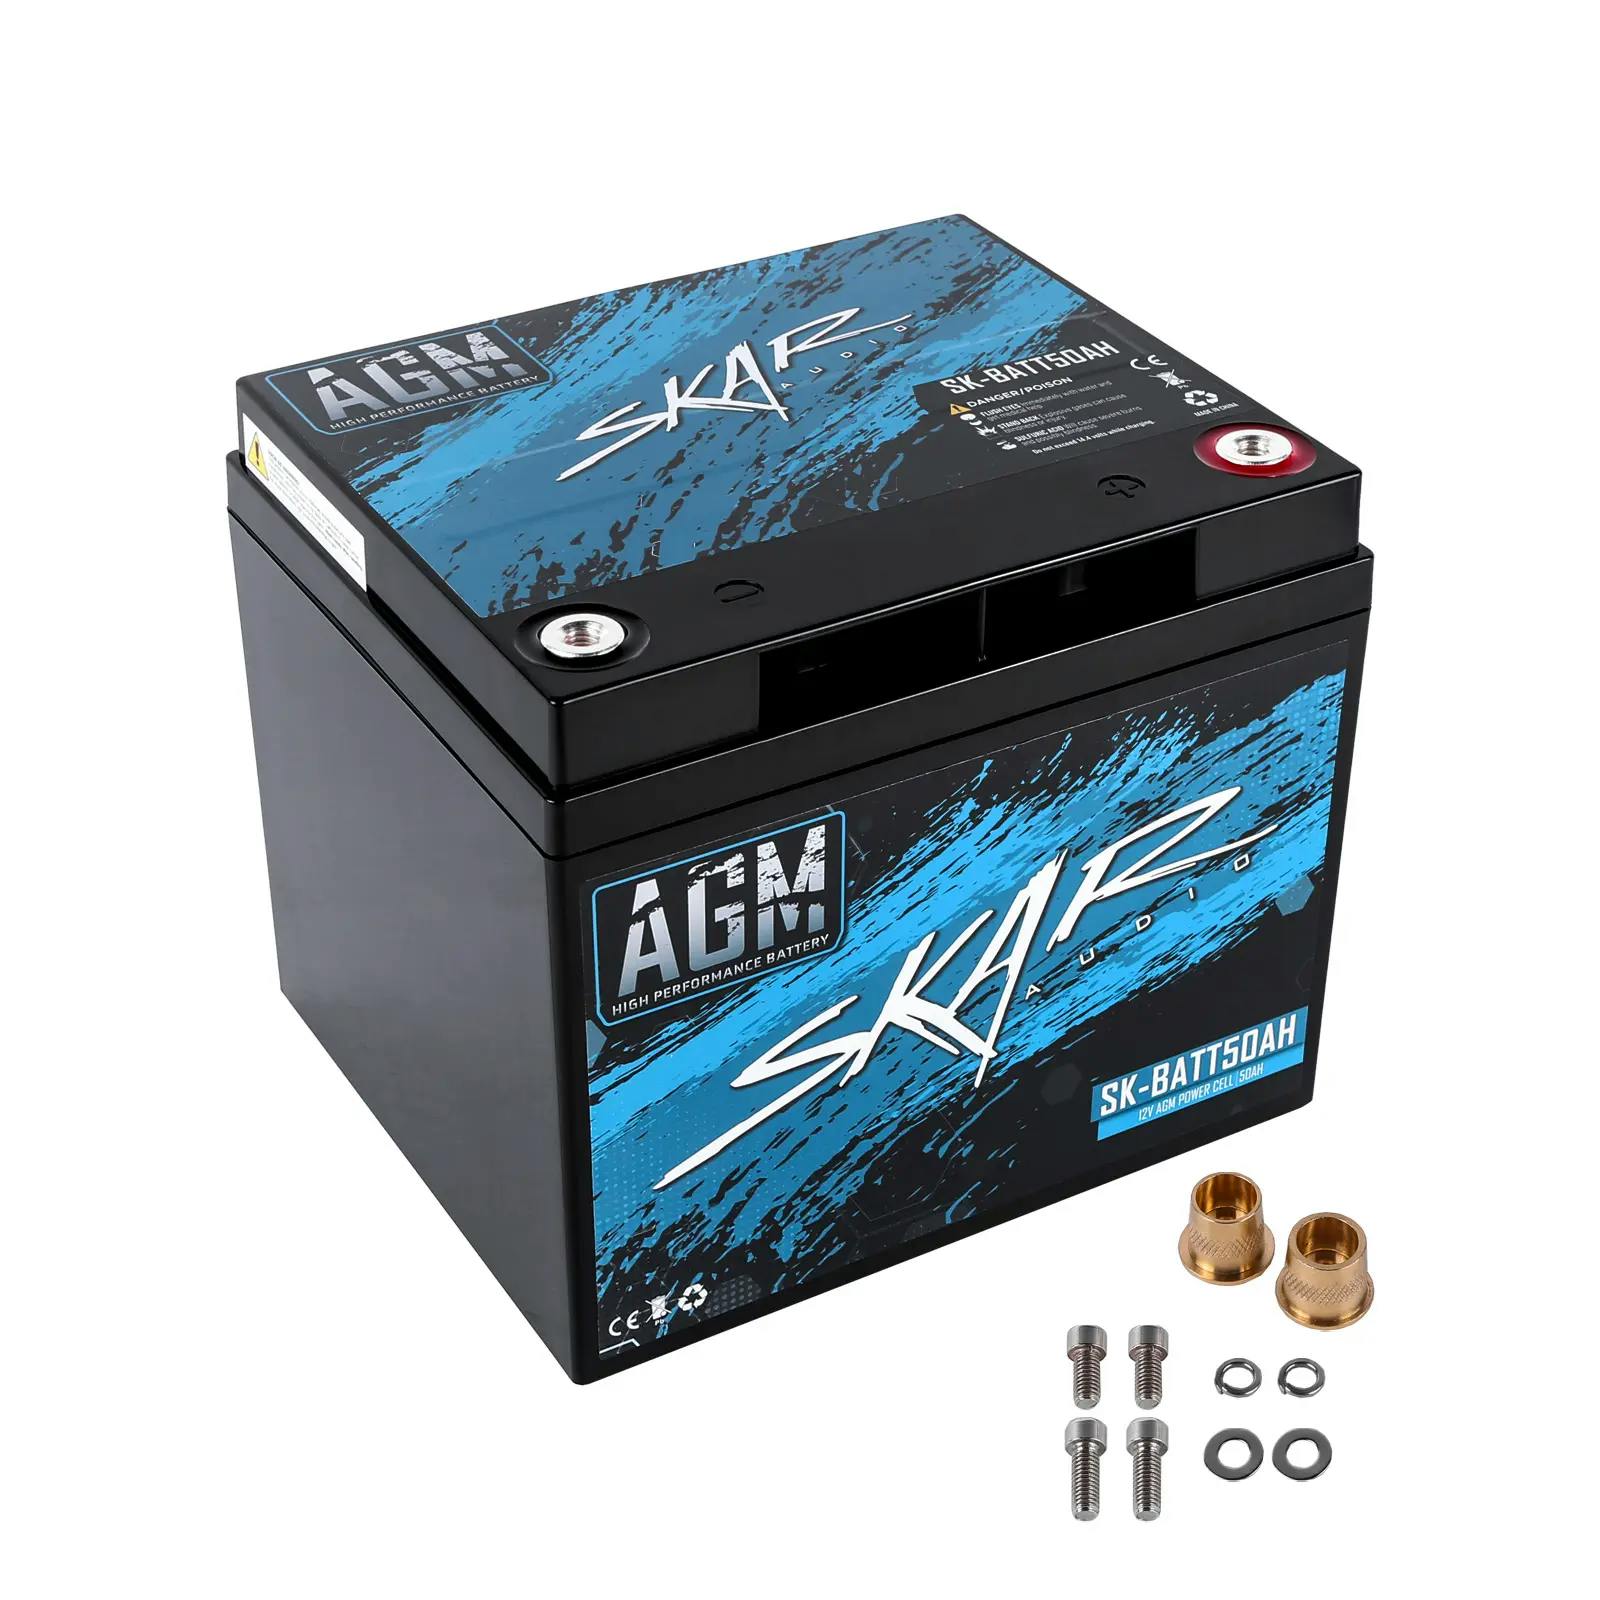 Featured Product Photo 1 for SK-BATT50AH | 12V 50Ah AGM High Performance Car Audio Battery